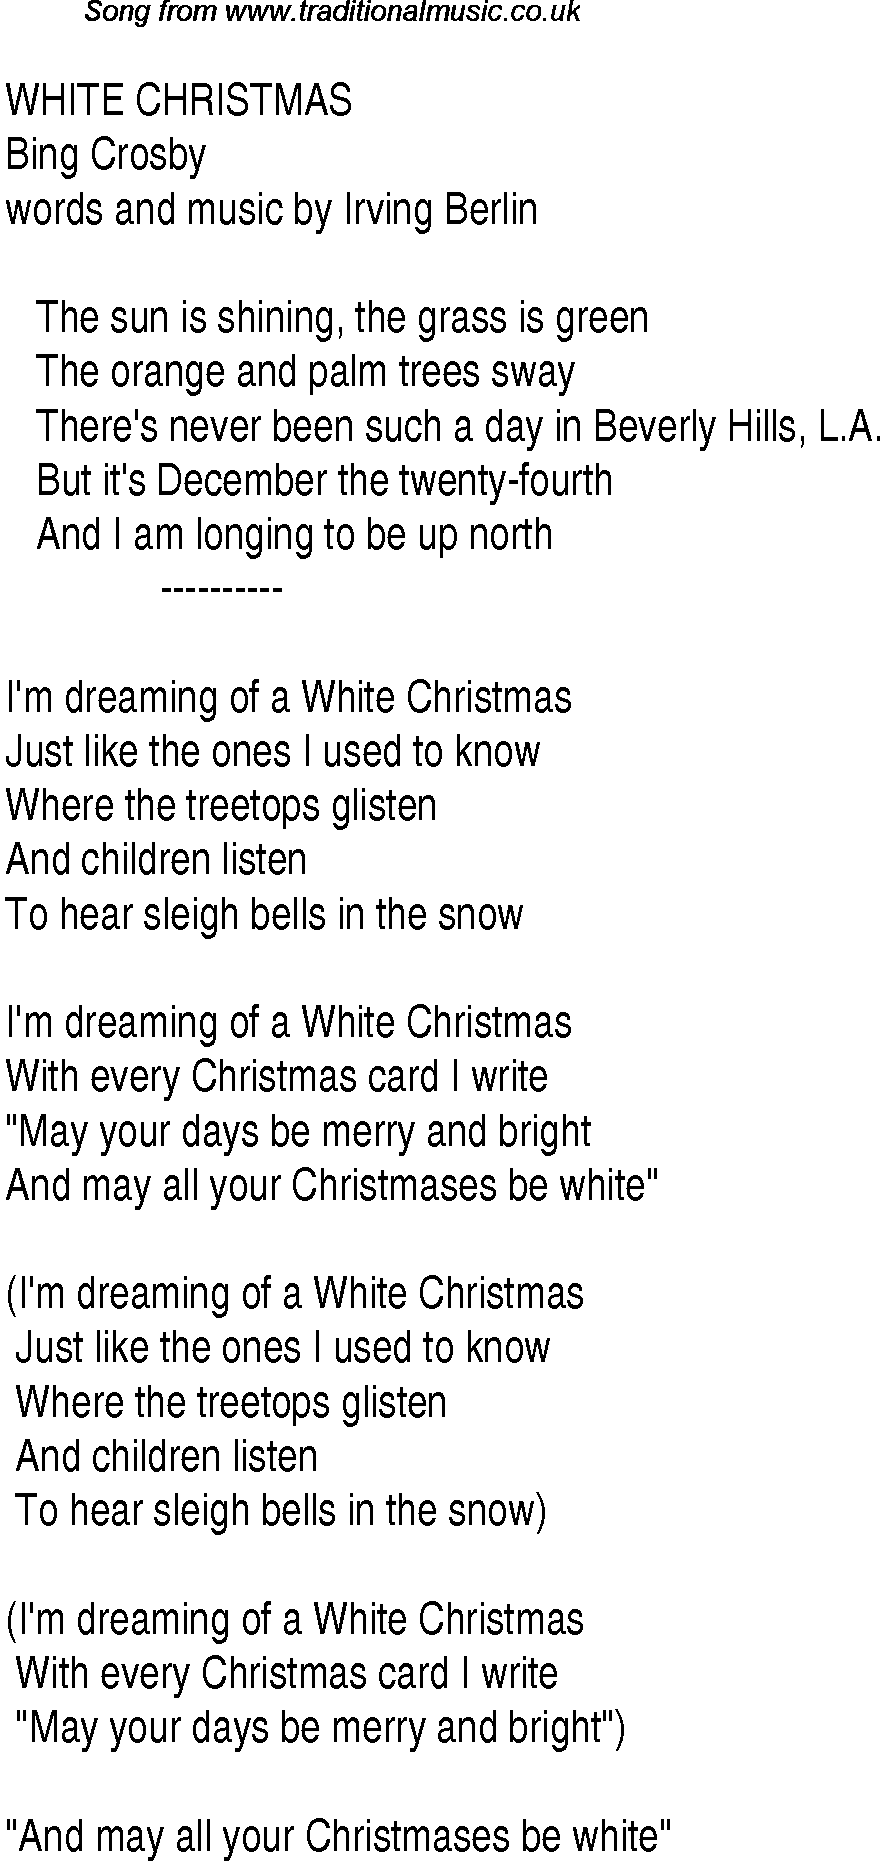 Music charts top songs 1948 - lyrics for White Christmas